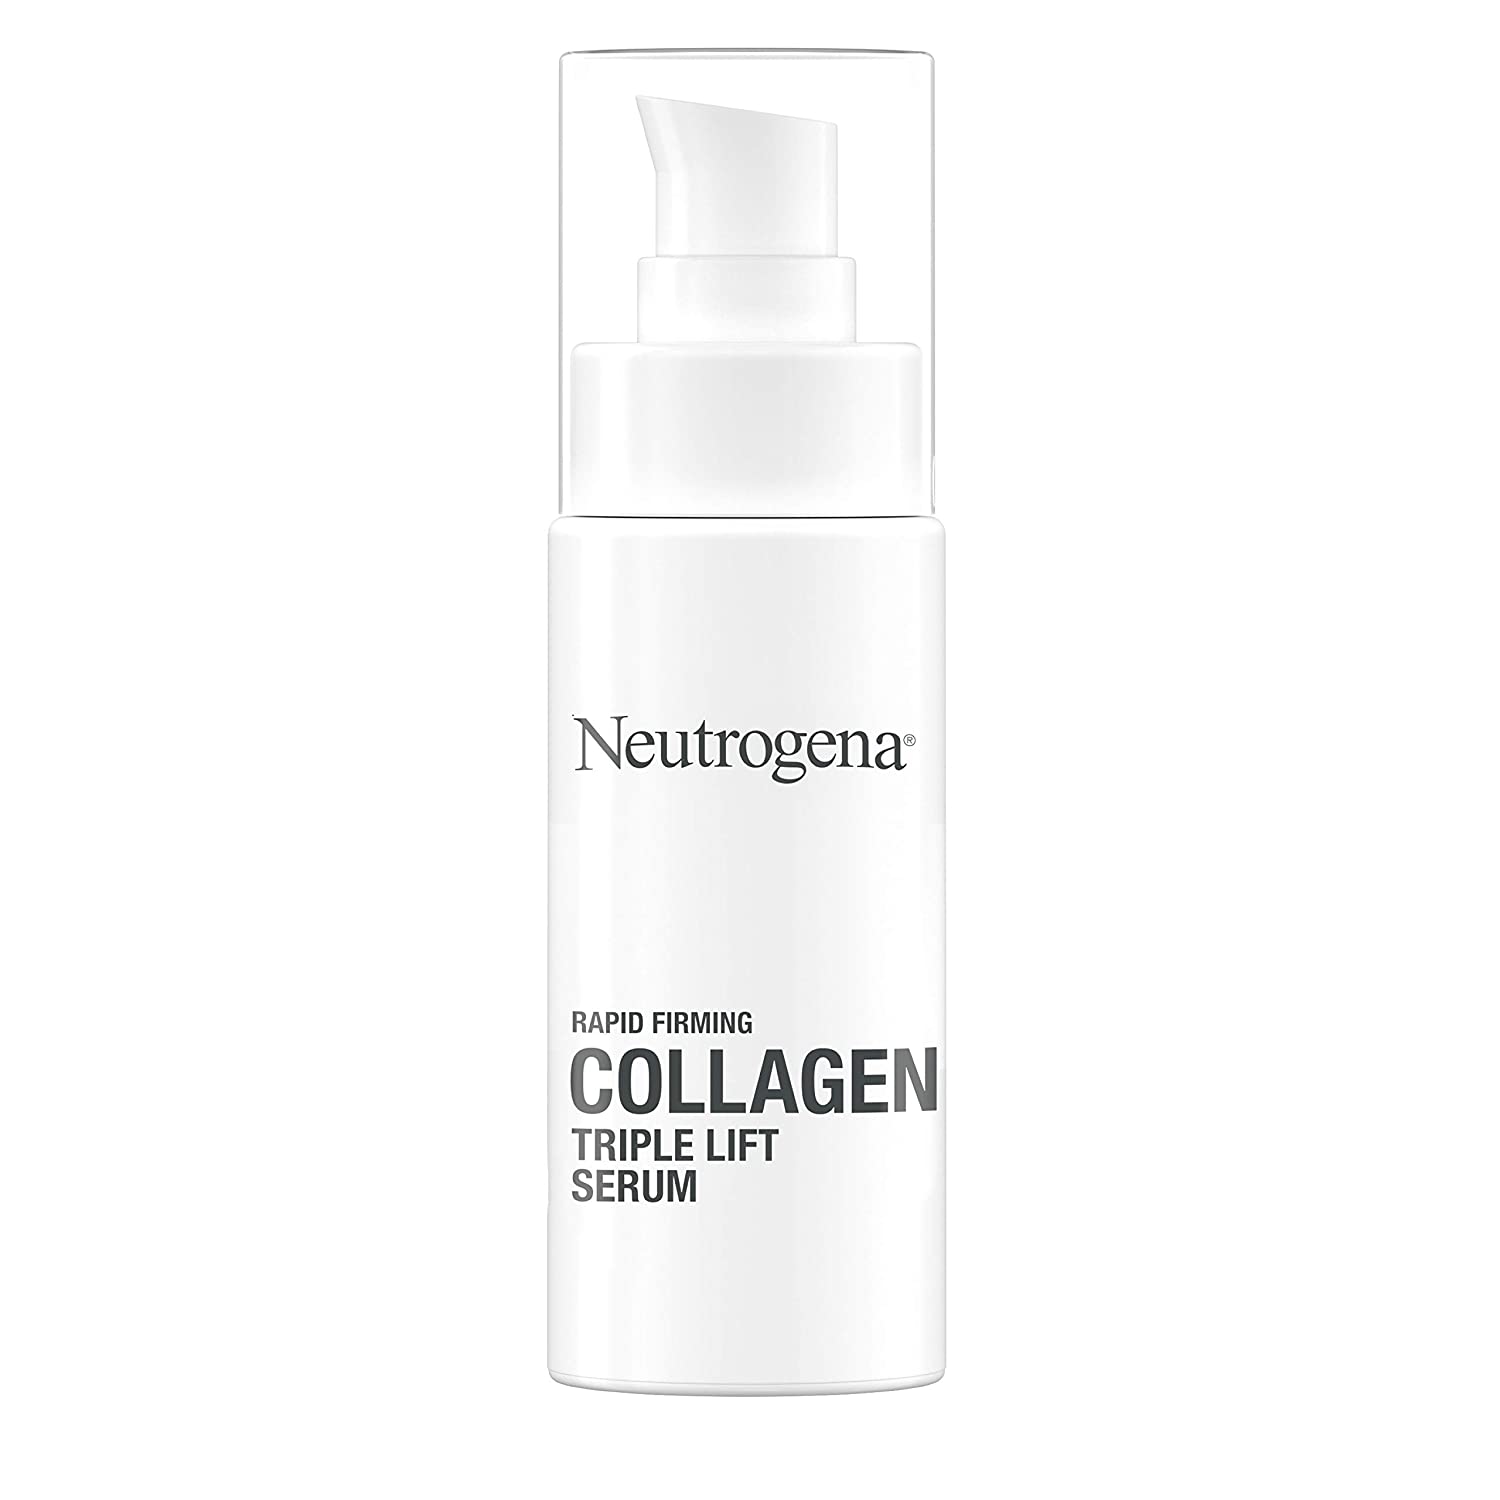 Neutrogena Rapid Firming Collagen Triple Lift Face Serum